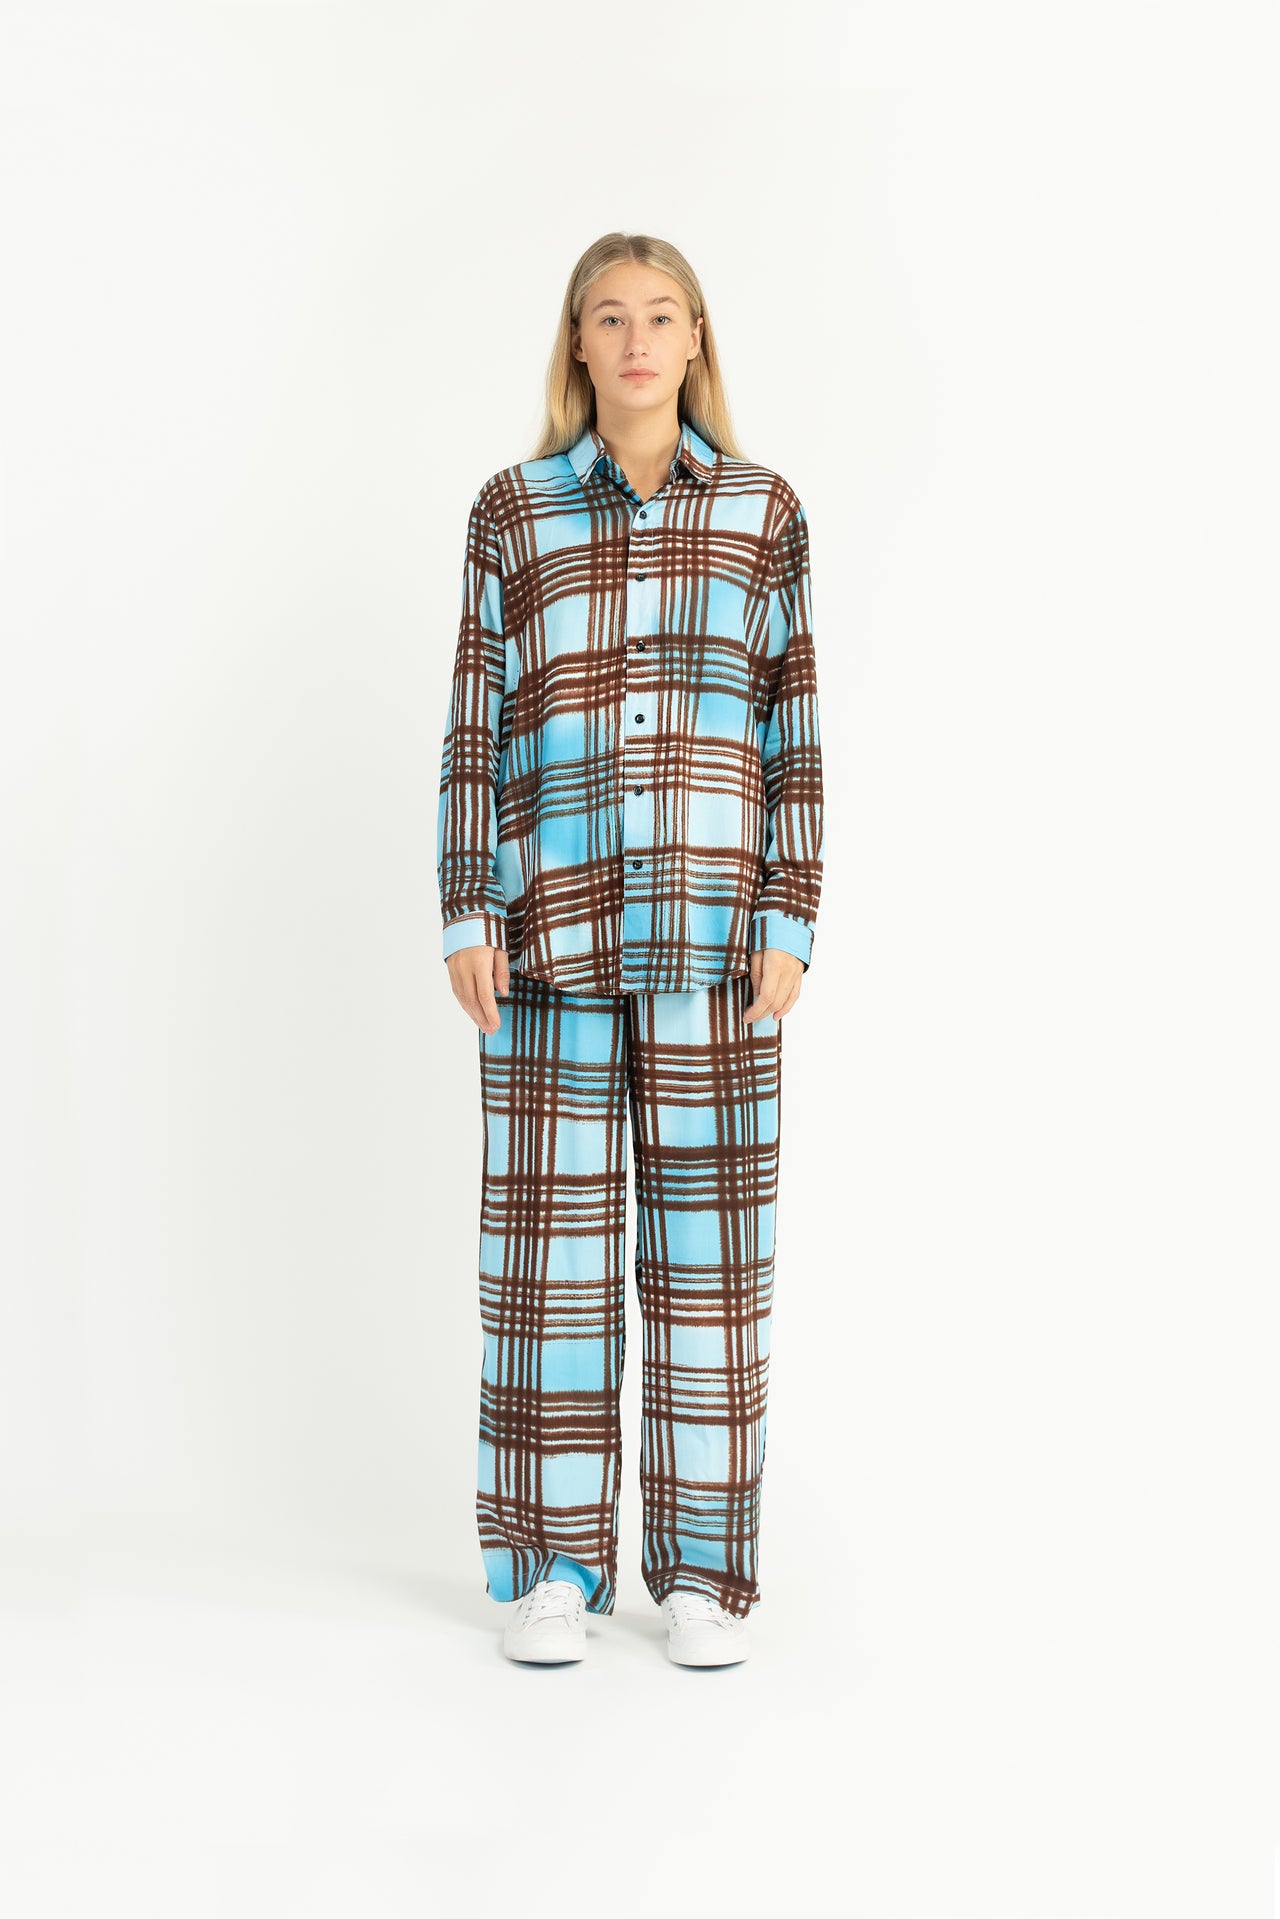 Milkbar Winter Pyjamas